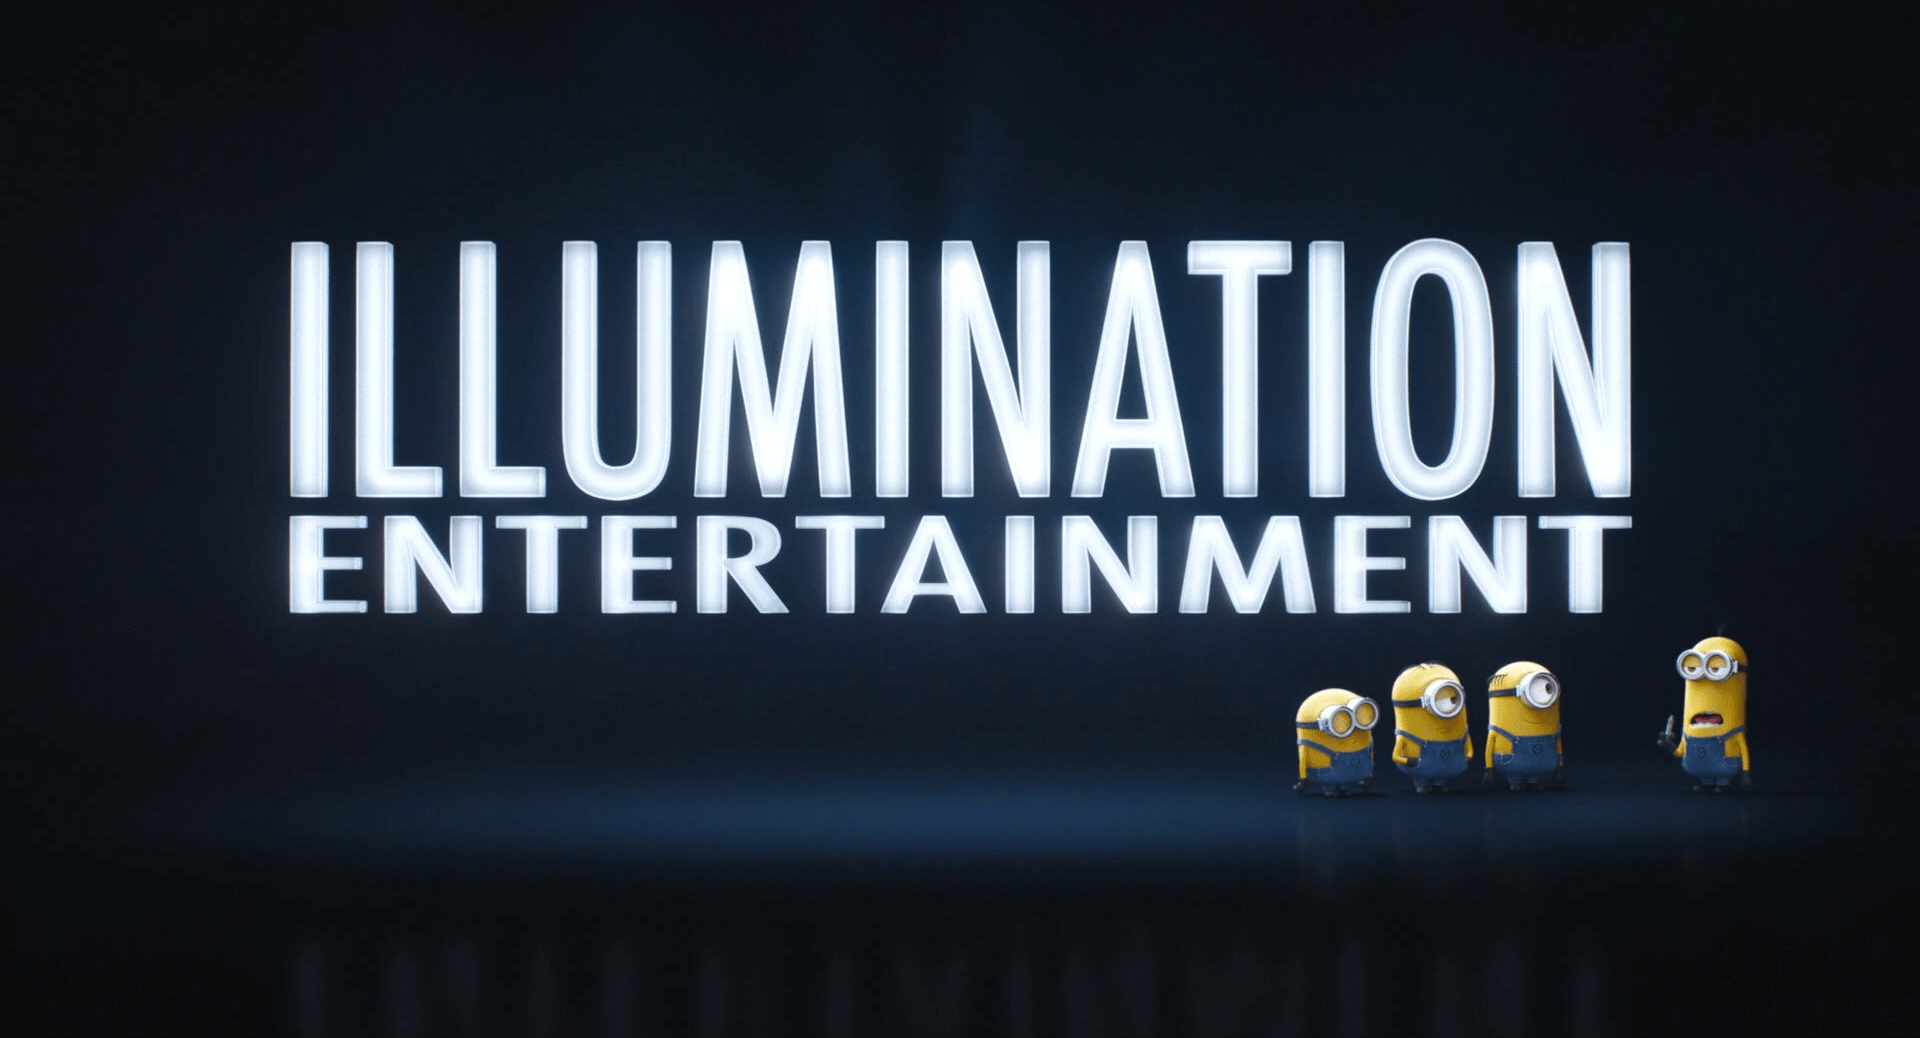 Dream Movie Logo - Image - Illumination logo sing movie.png | Adam's Dream Logos 2.0 ...